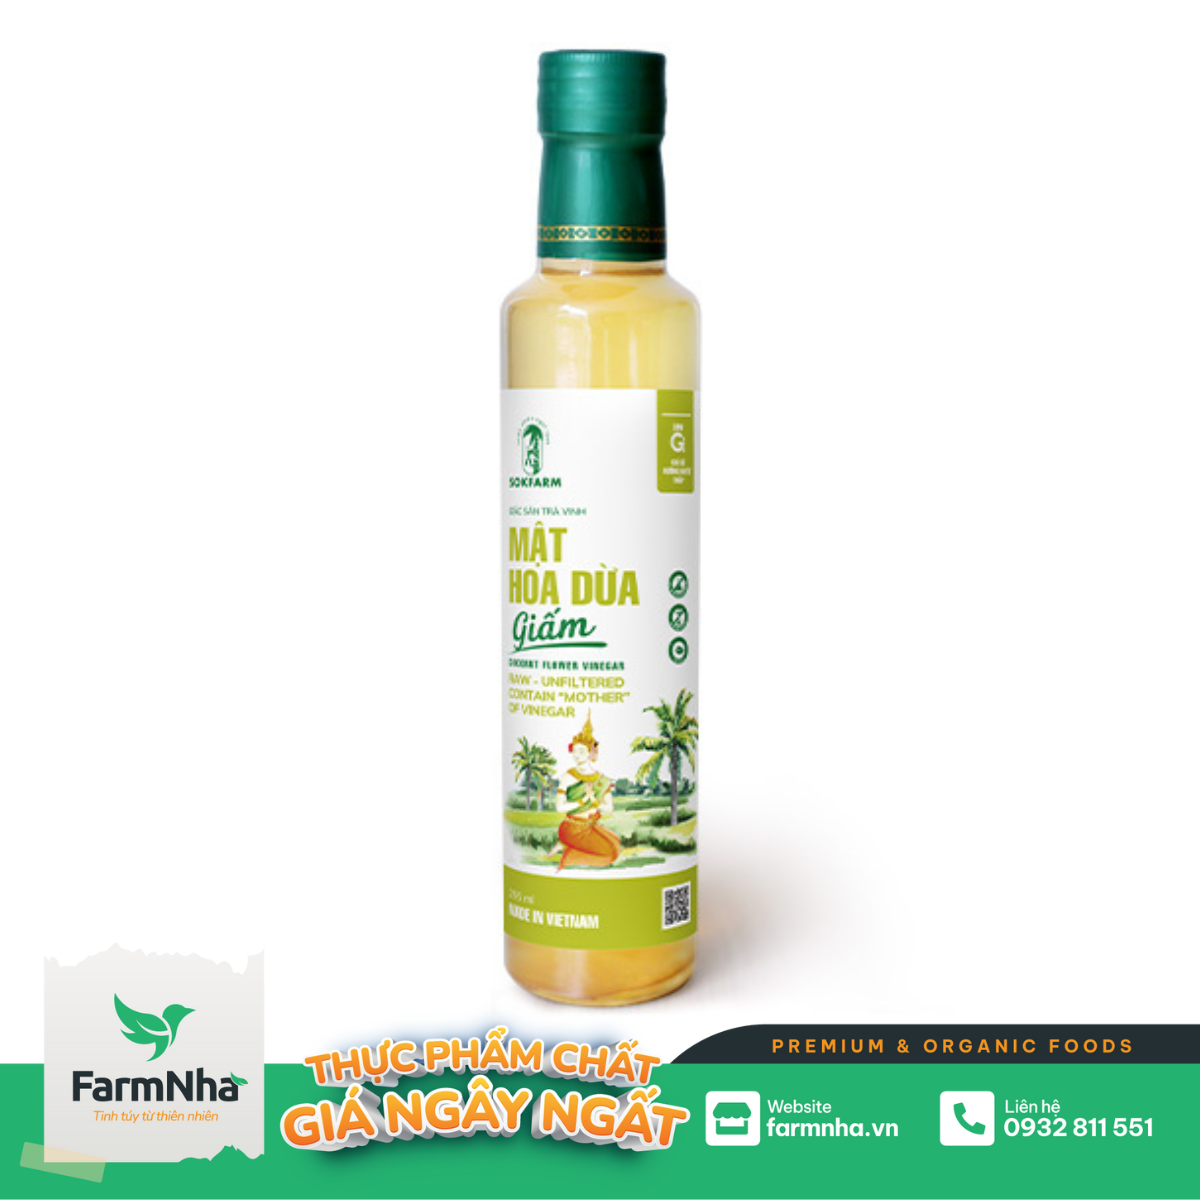 Giấm Mật Hoa Dừa Sokfarm 265ml - Chuẩn Xuất Khẩu FDA Hoa Kỳ